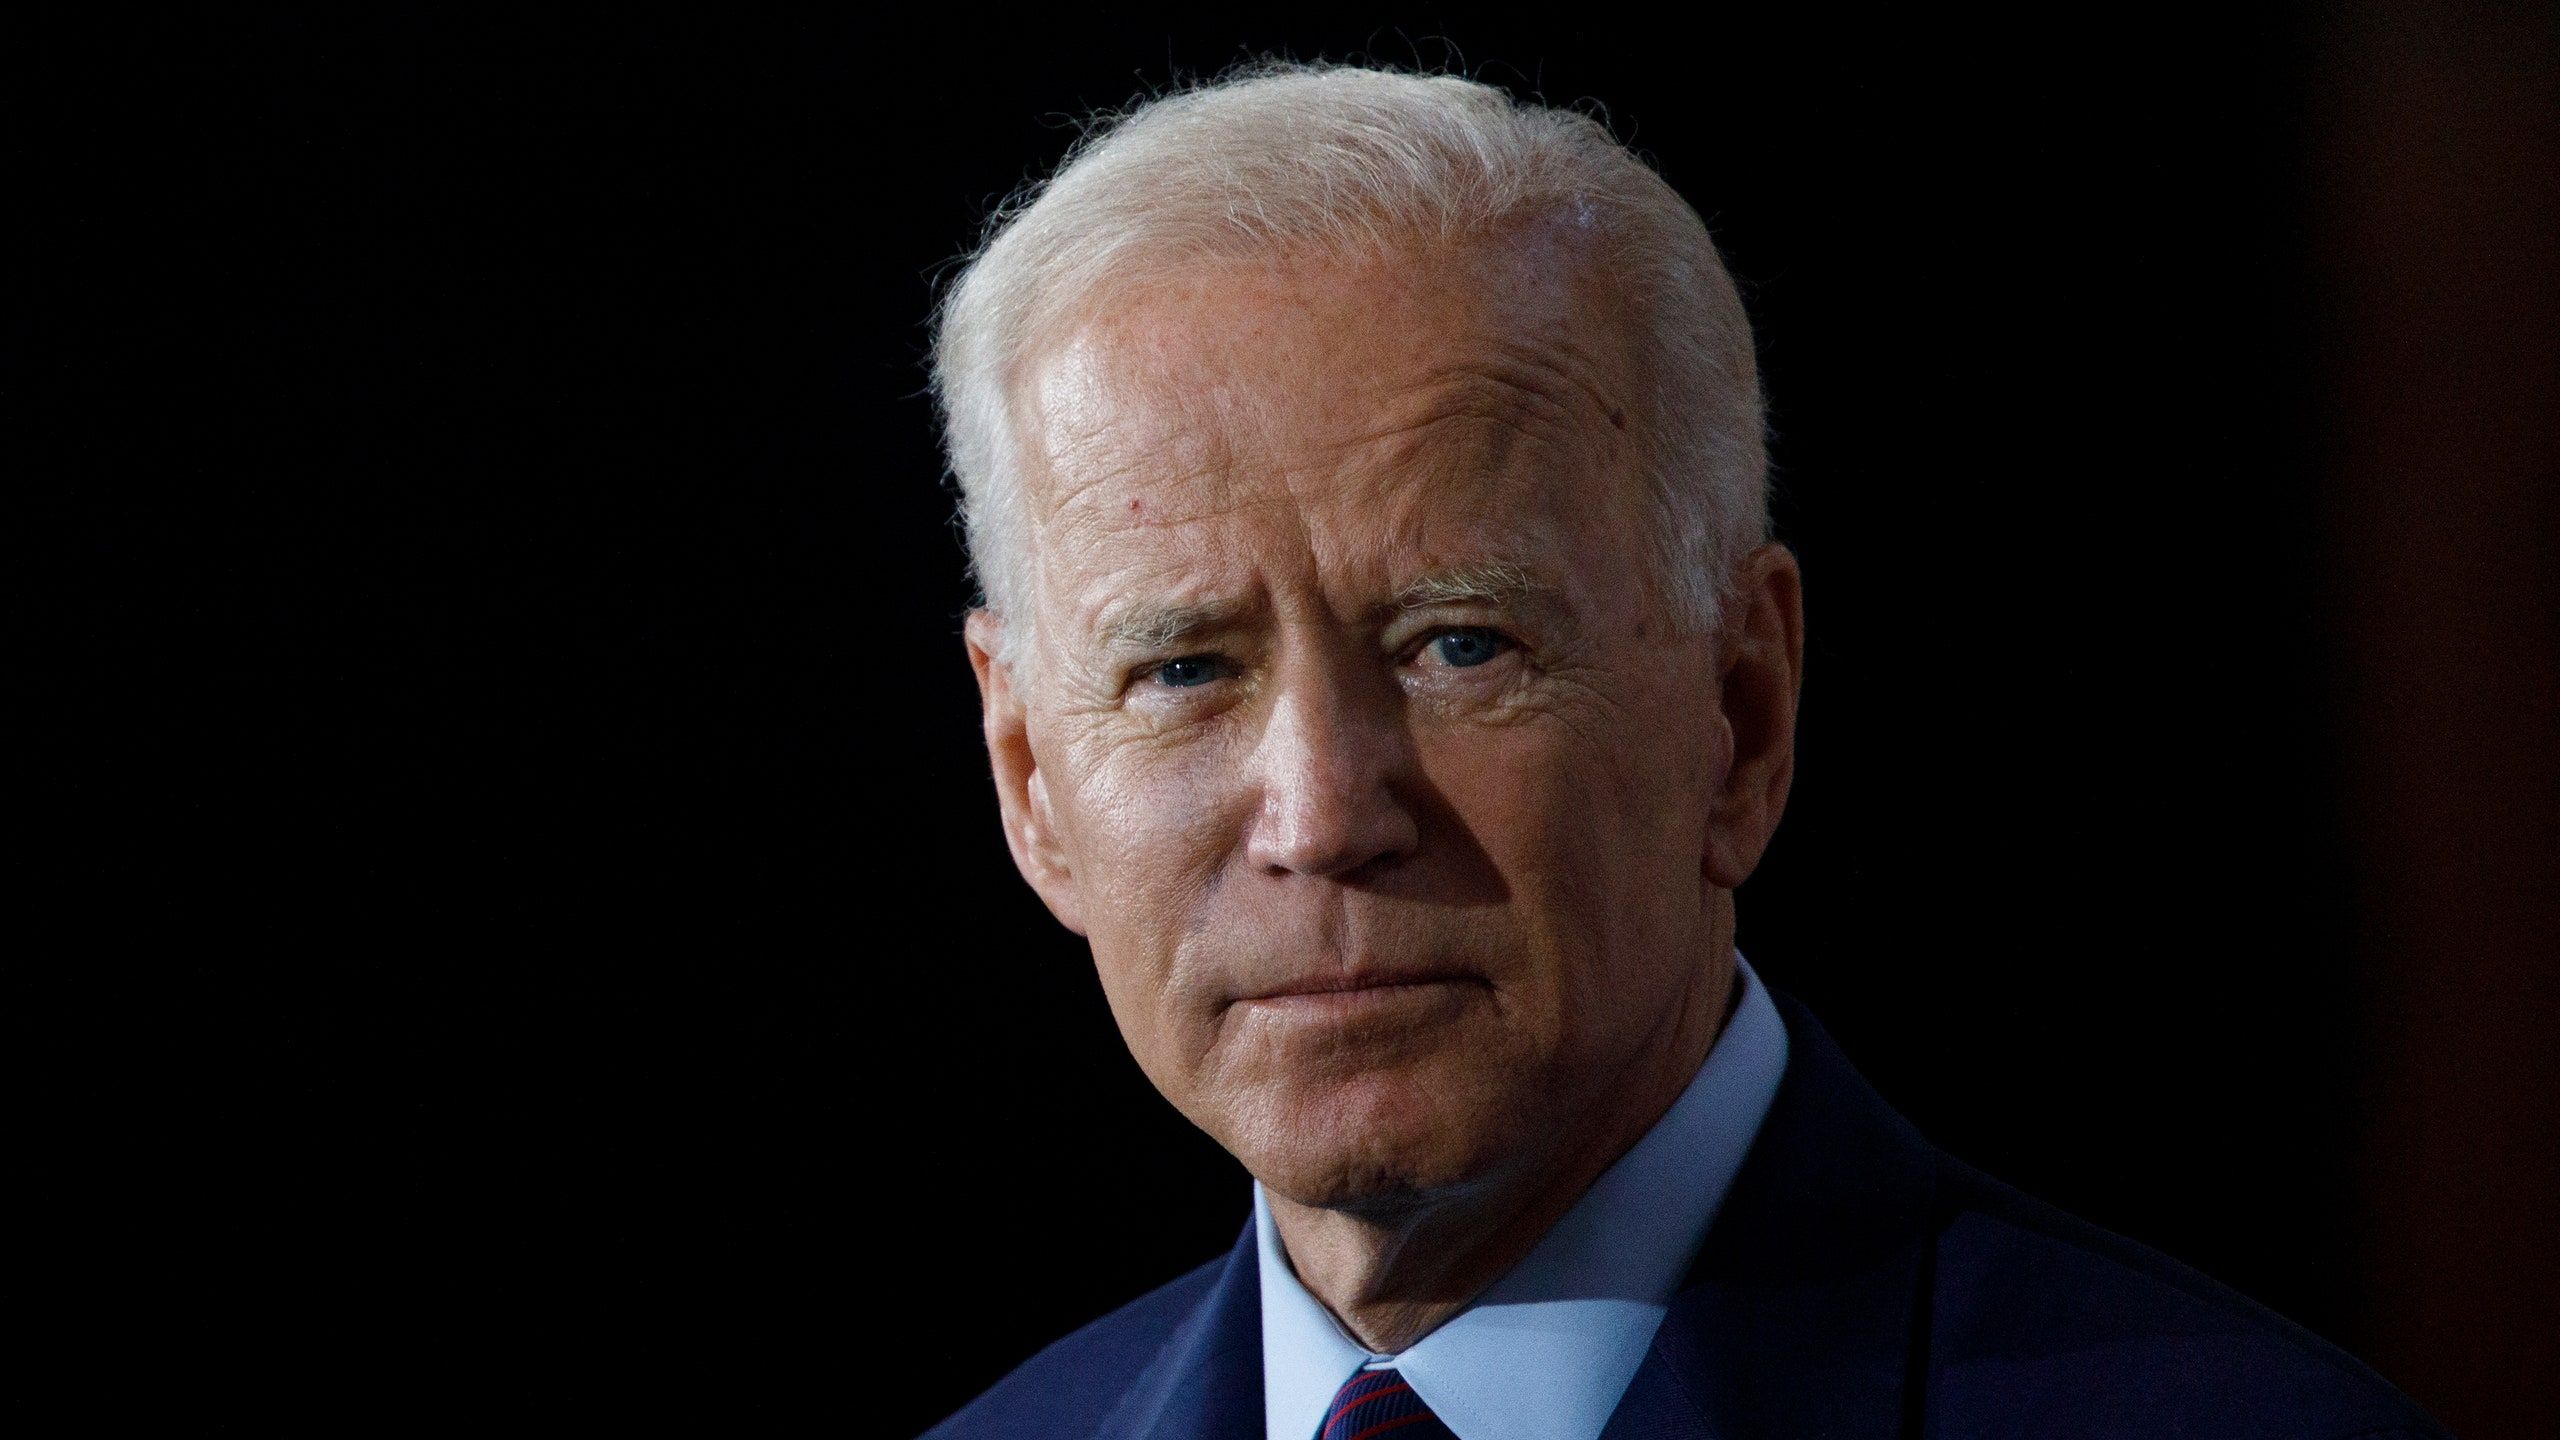 Joe Biden Denies He Sexually Assaulted Former Senate Aide Tara